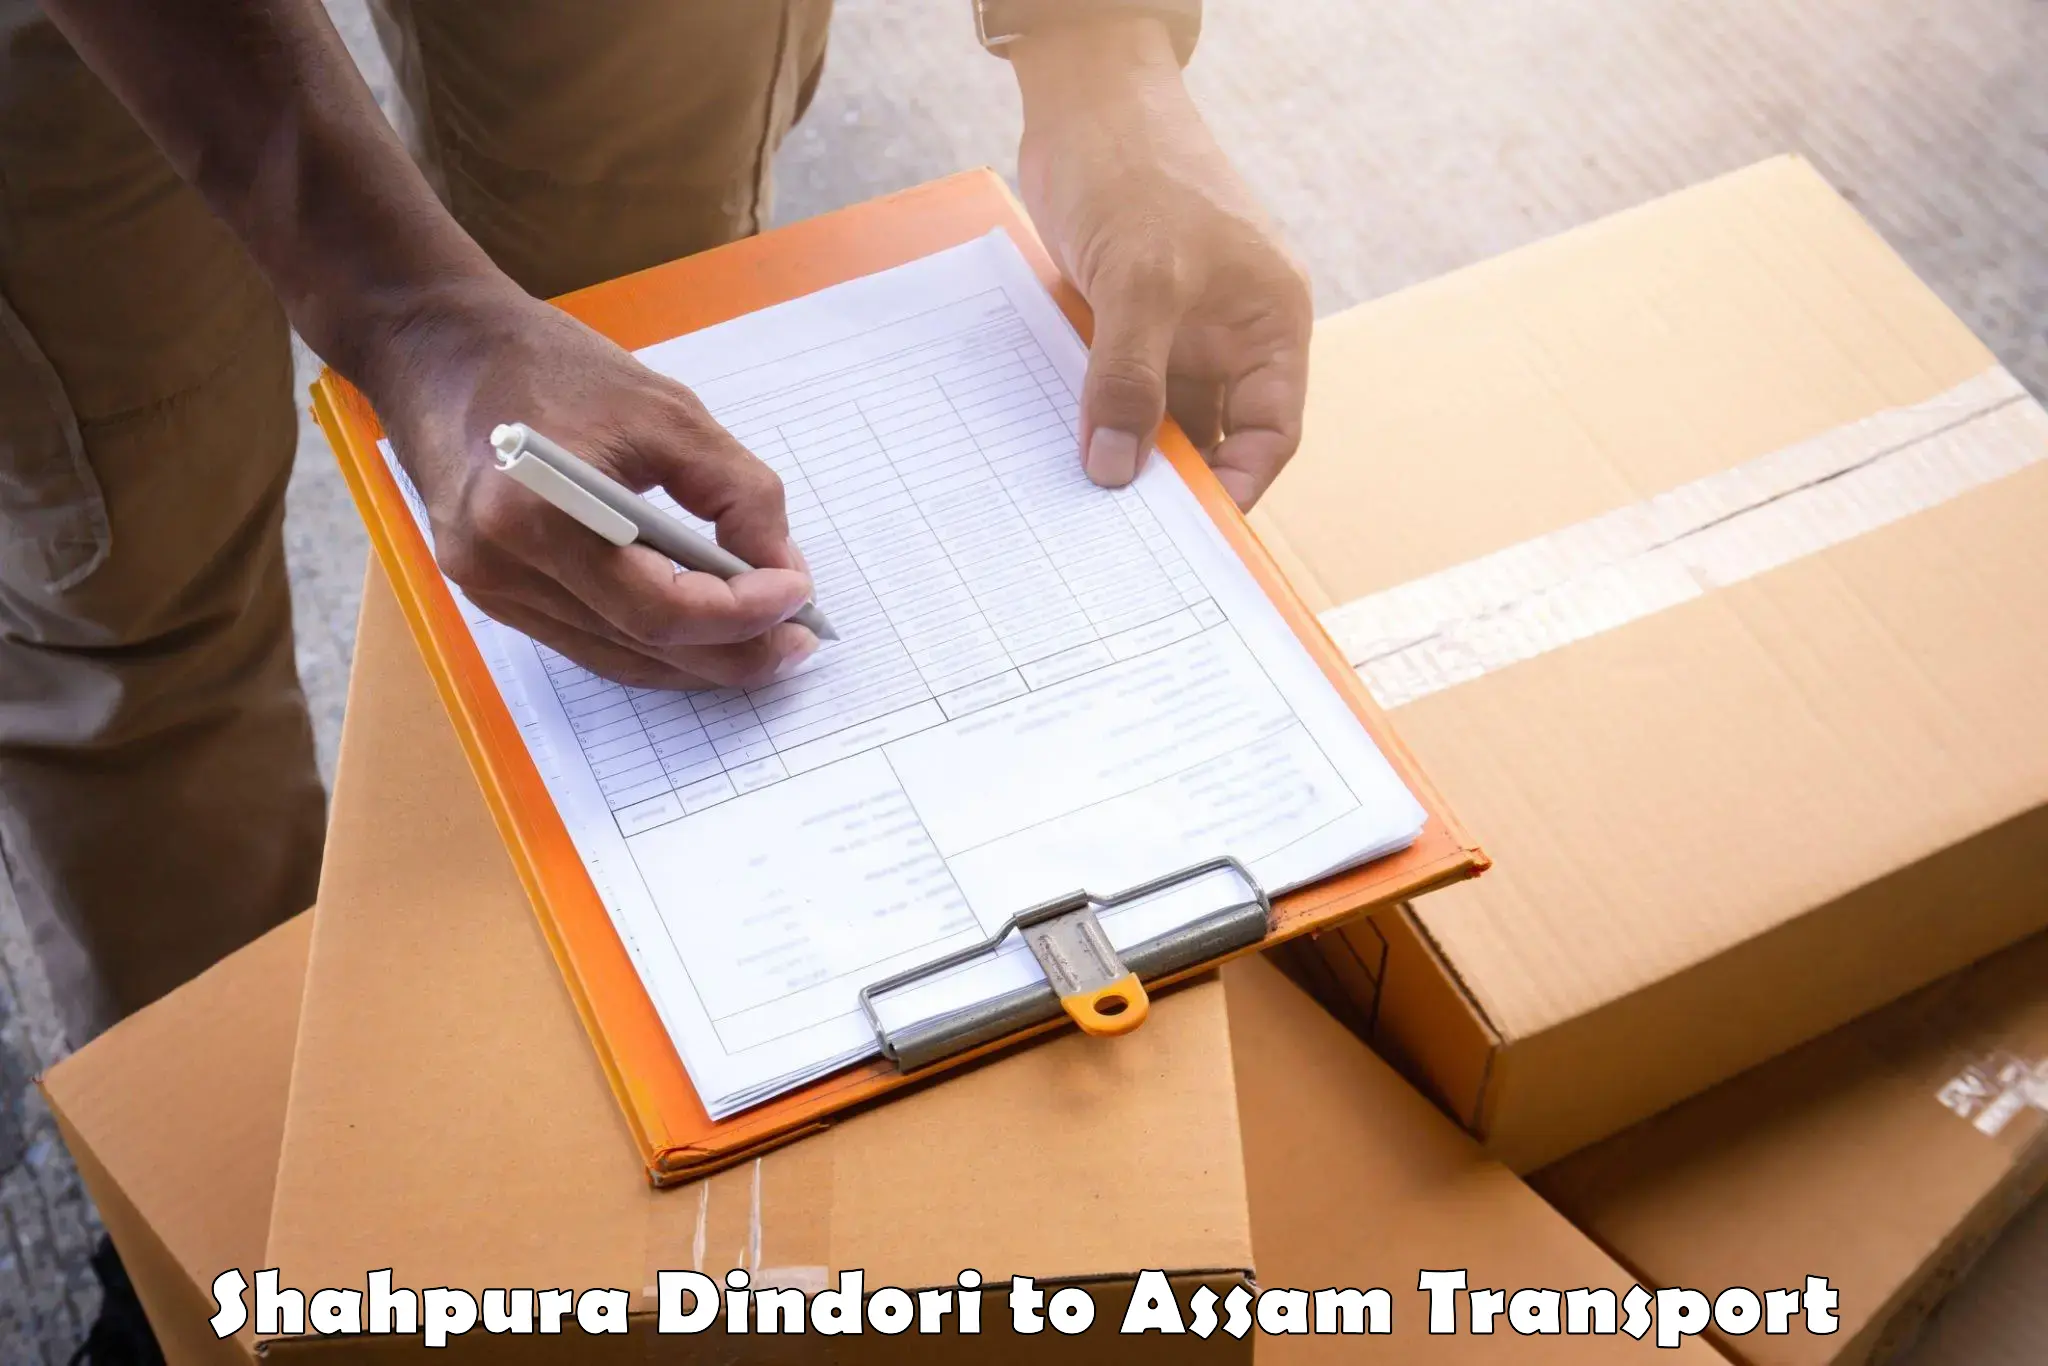 Transport shared services Shahpura Dindori to Assam